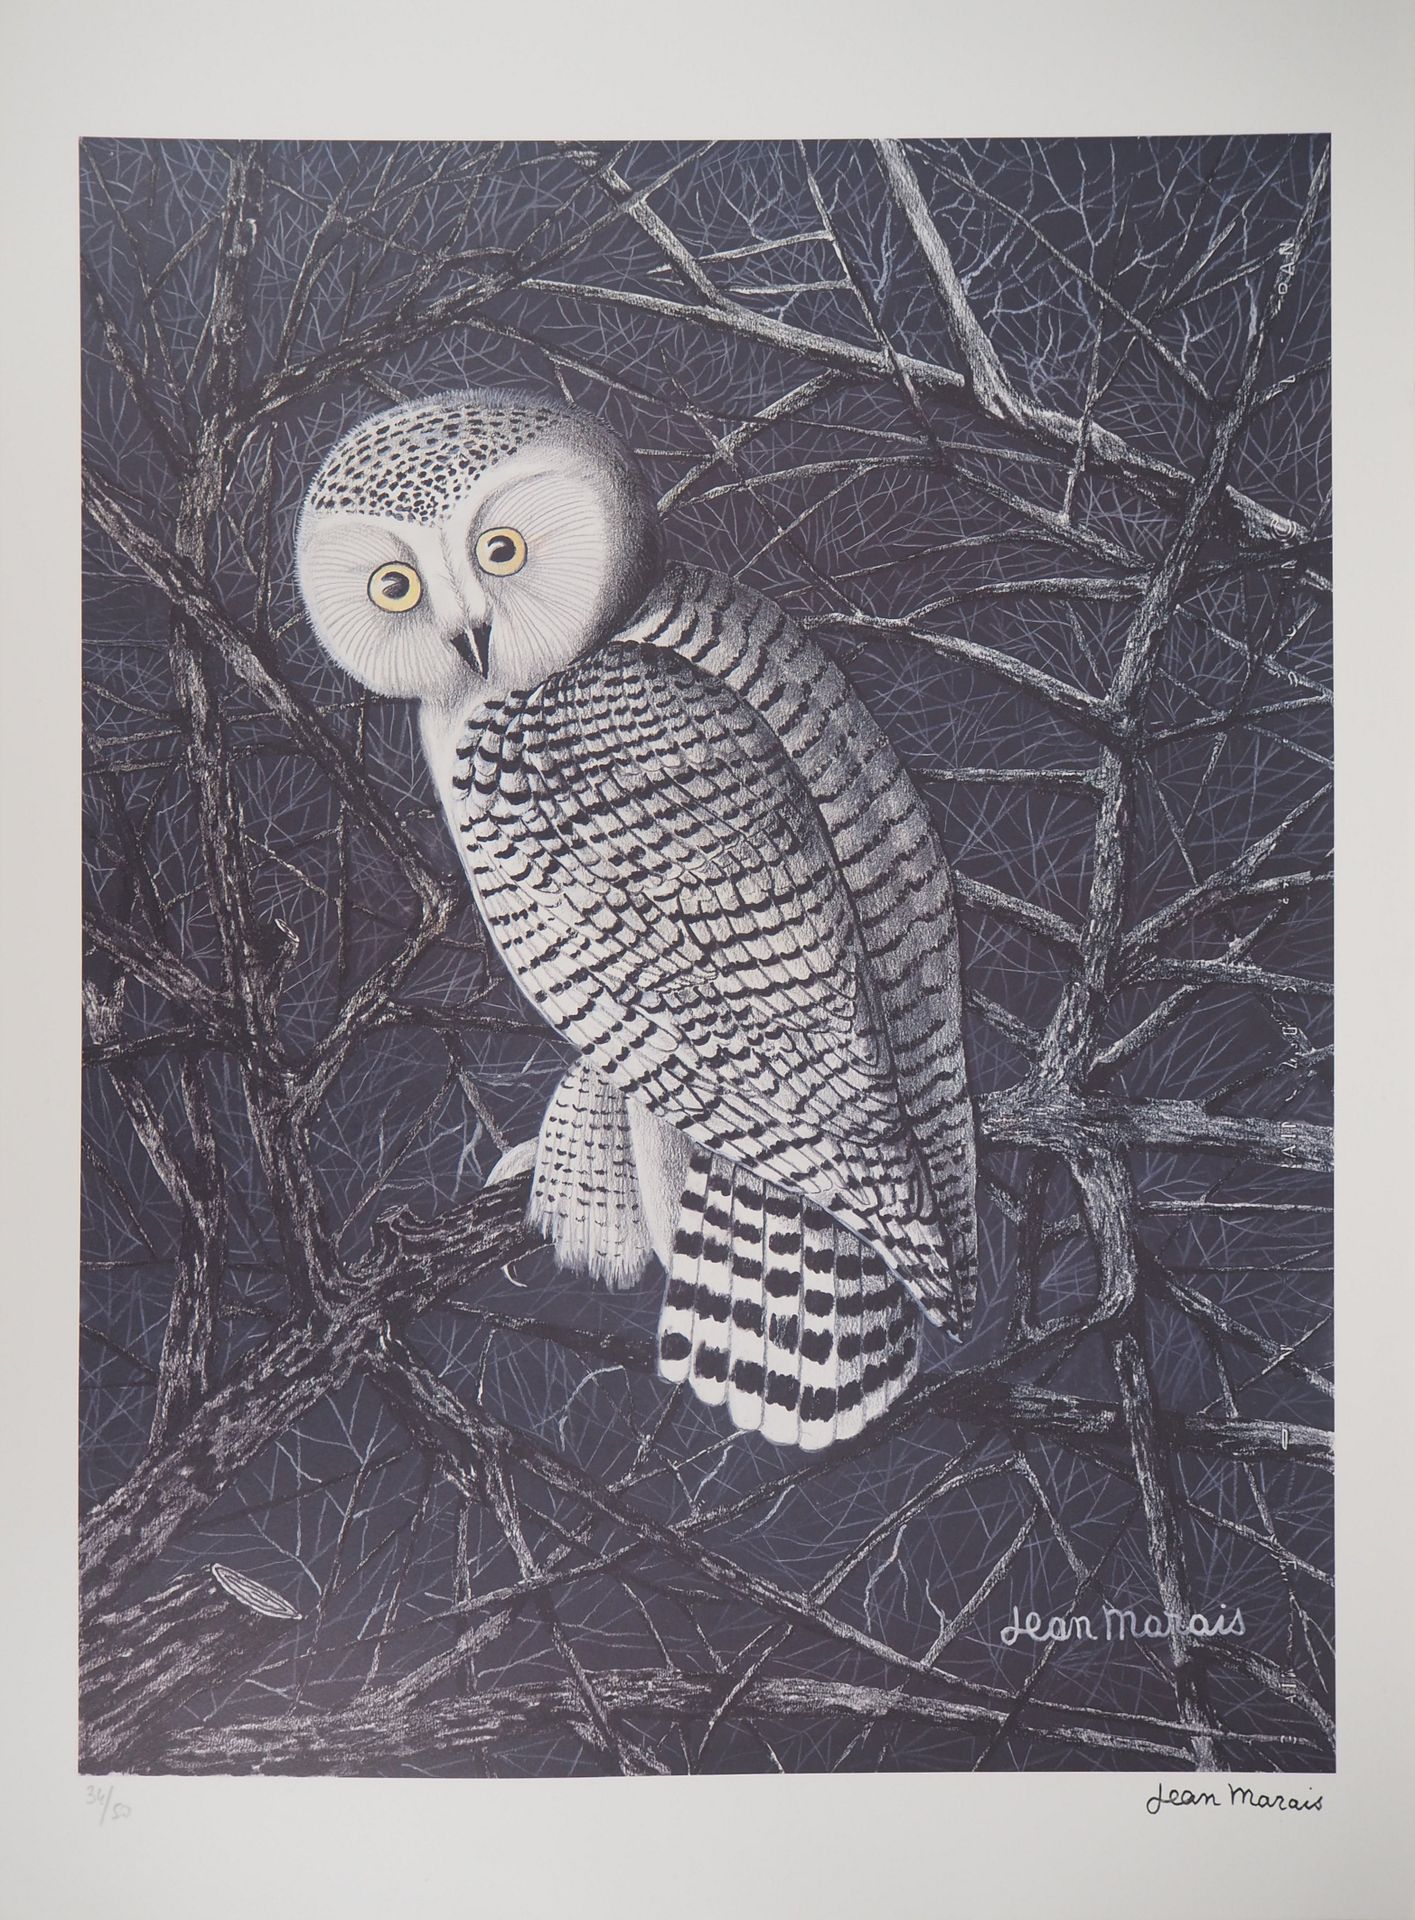 Jean MARAIS Jean Marais (1913 - 1998)

The Owl

Original lithograph

Signed with&hellip;